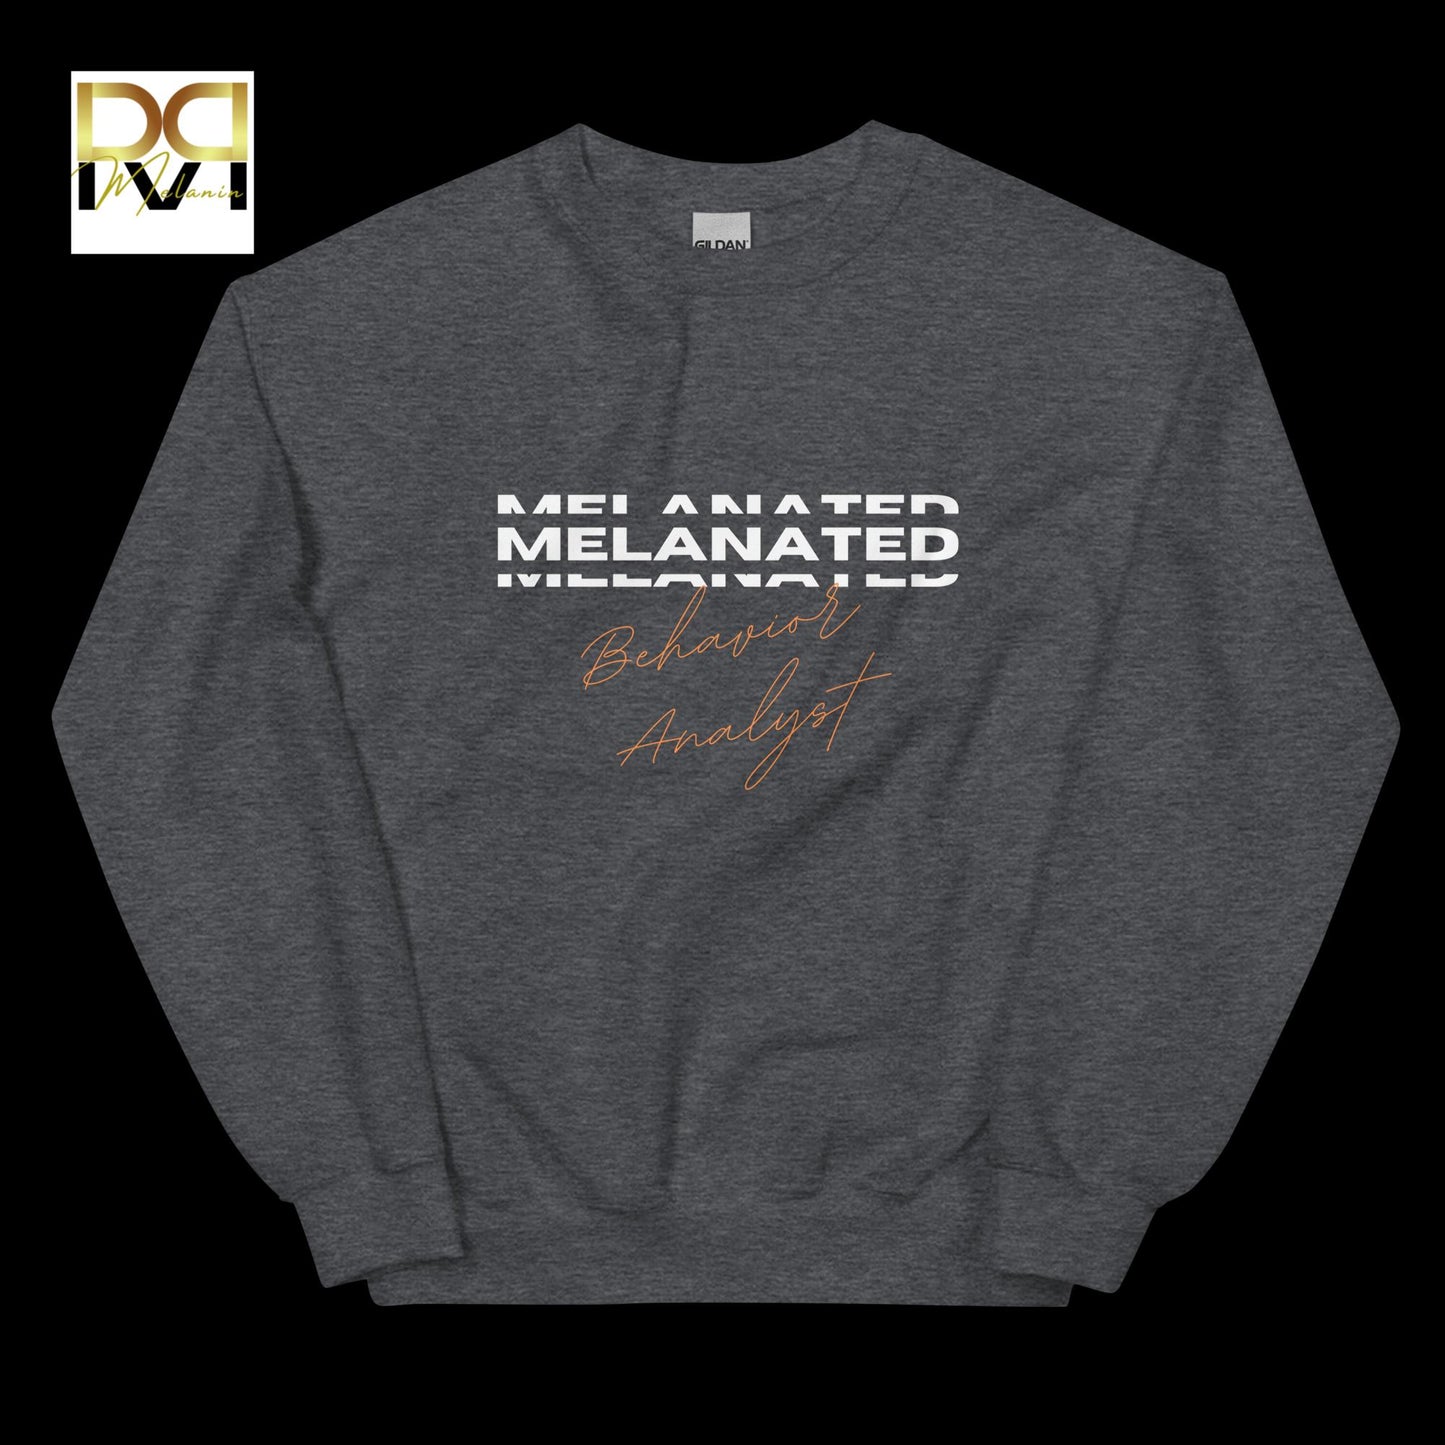 Melanated Behavior Analyst" Sweatshirt - Warmth and Cultural Pride